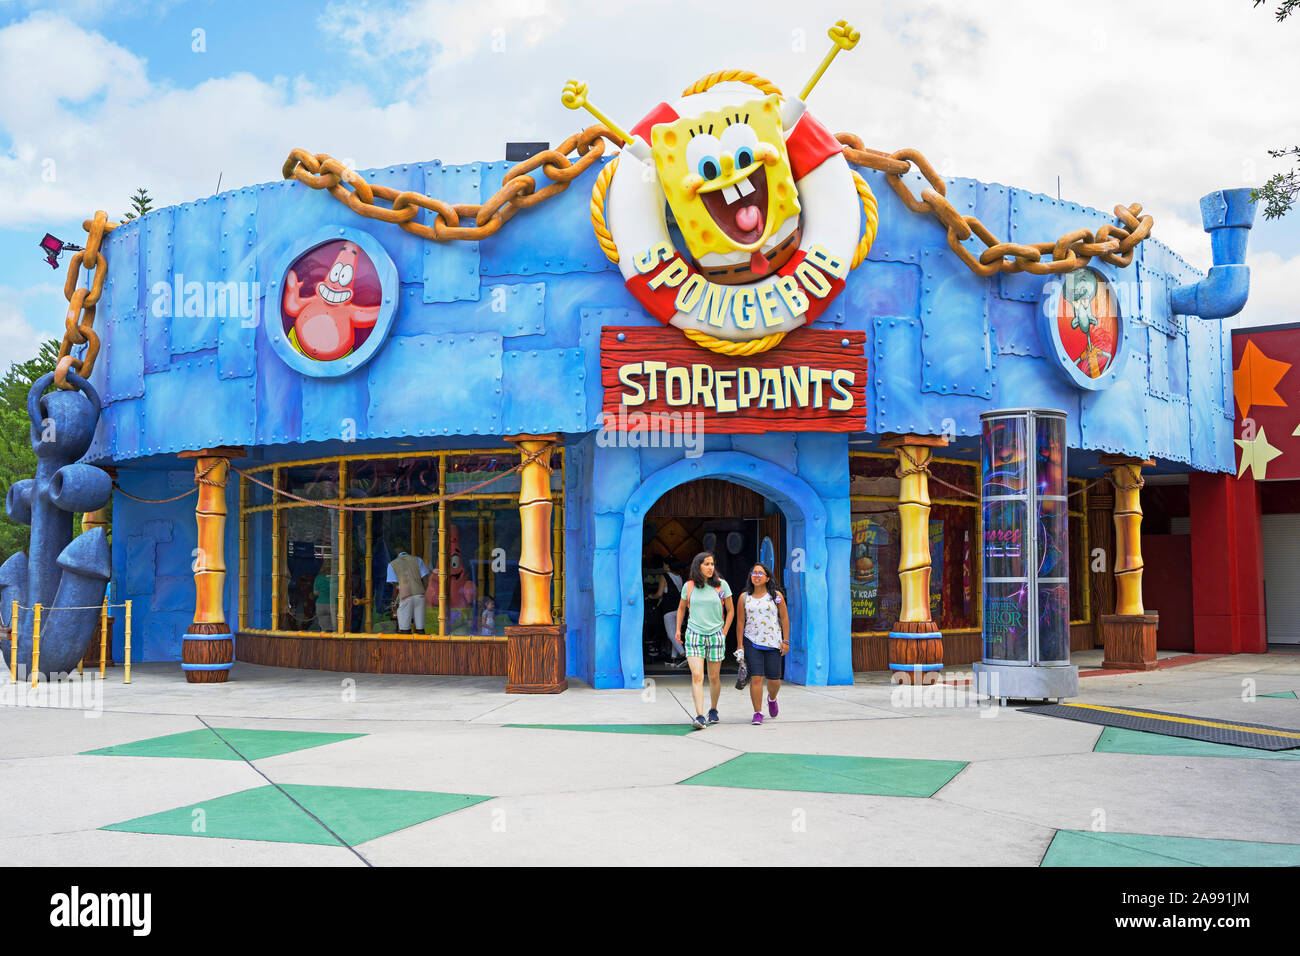 SpongeBob Store presso gli Universal Studios Orlando, People Shopping all'interno, SpongeBob SquarePants, StorePants Shop ingresso, esterno, Florida, Stati Uniti d'America Foto Stock